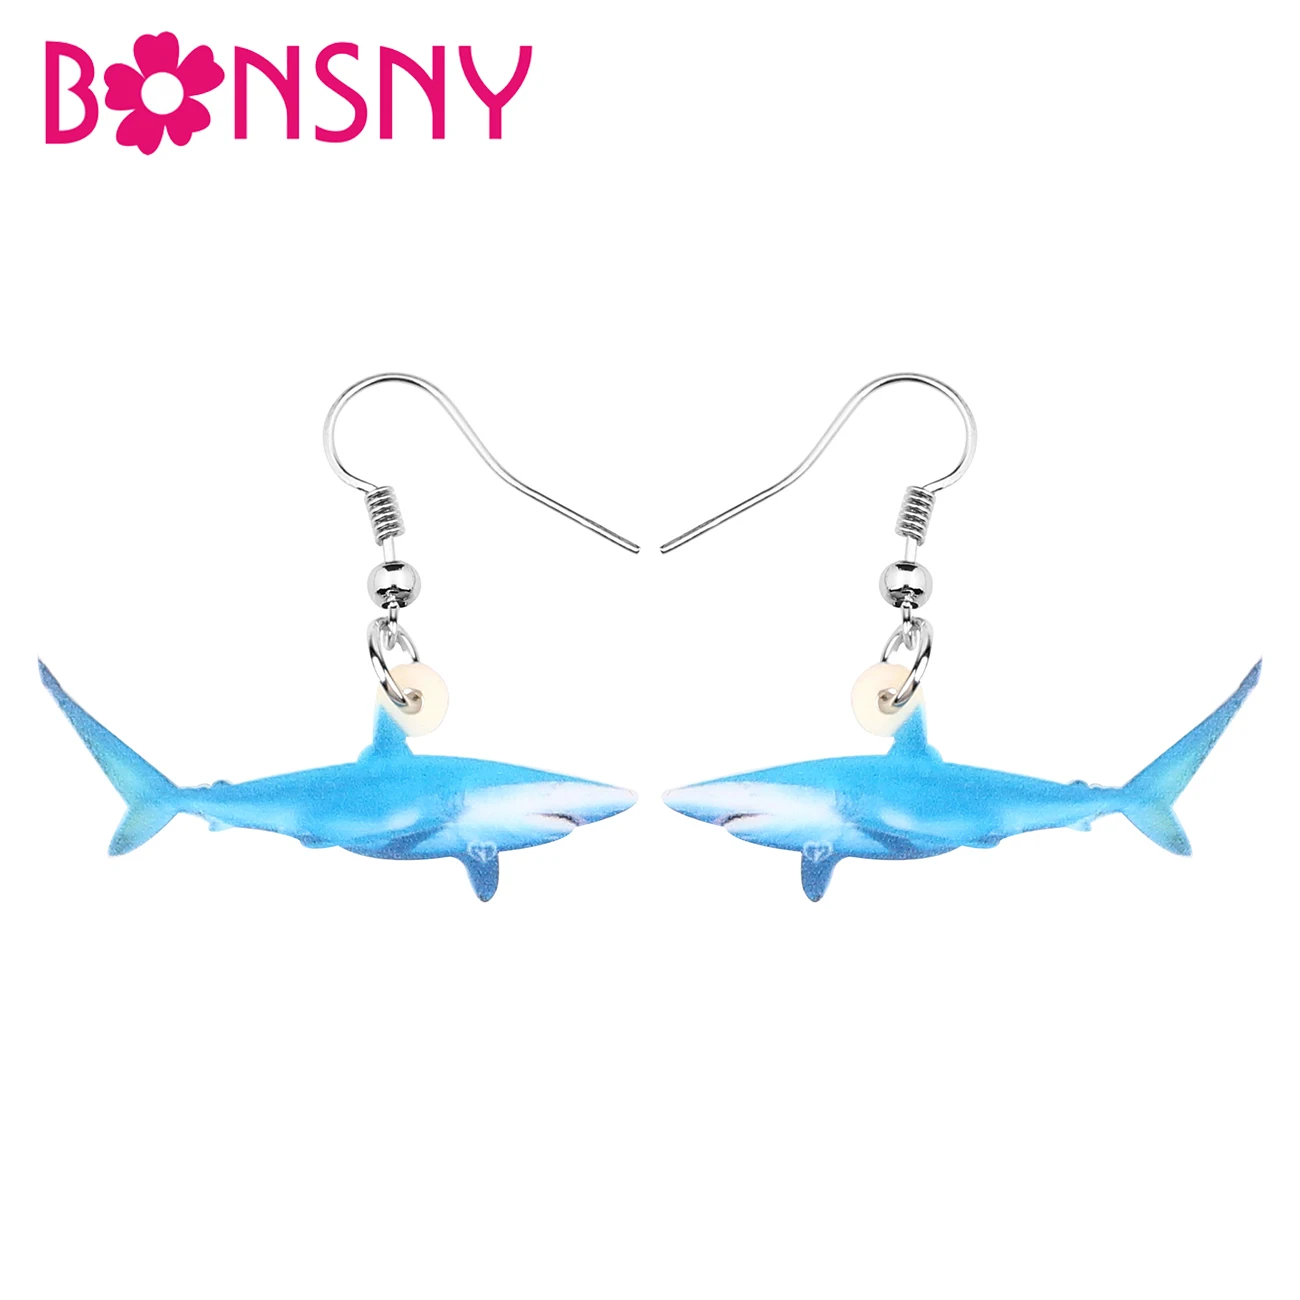 

Bonsny Acrylic Ocean Blue Shark Fish Earrings Drop Dangle Sea Animal Jewelry Charms Gifts For Women Teen Girl Accessory Hot Sale